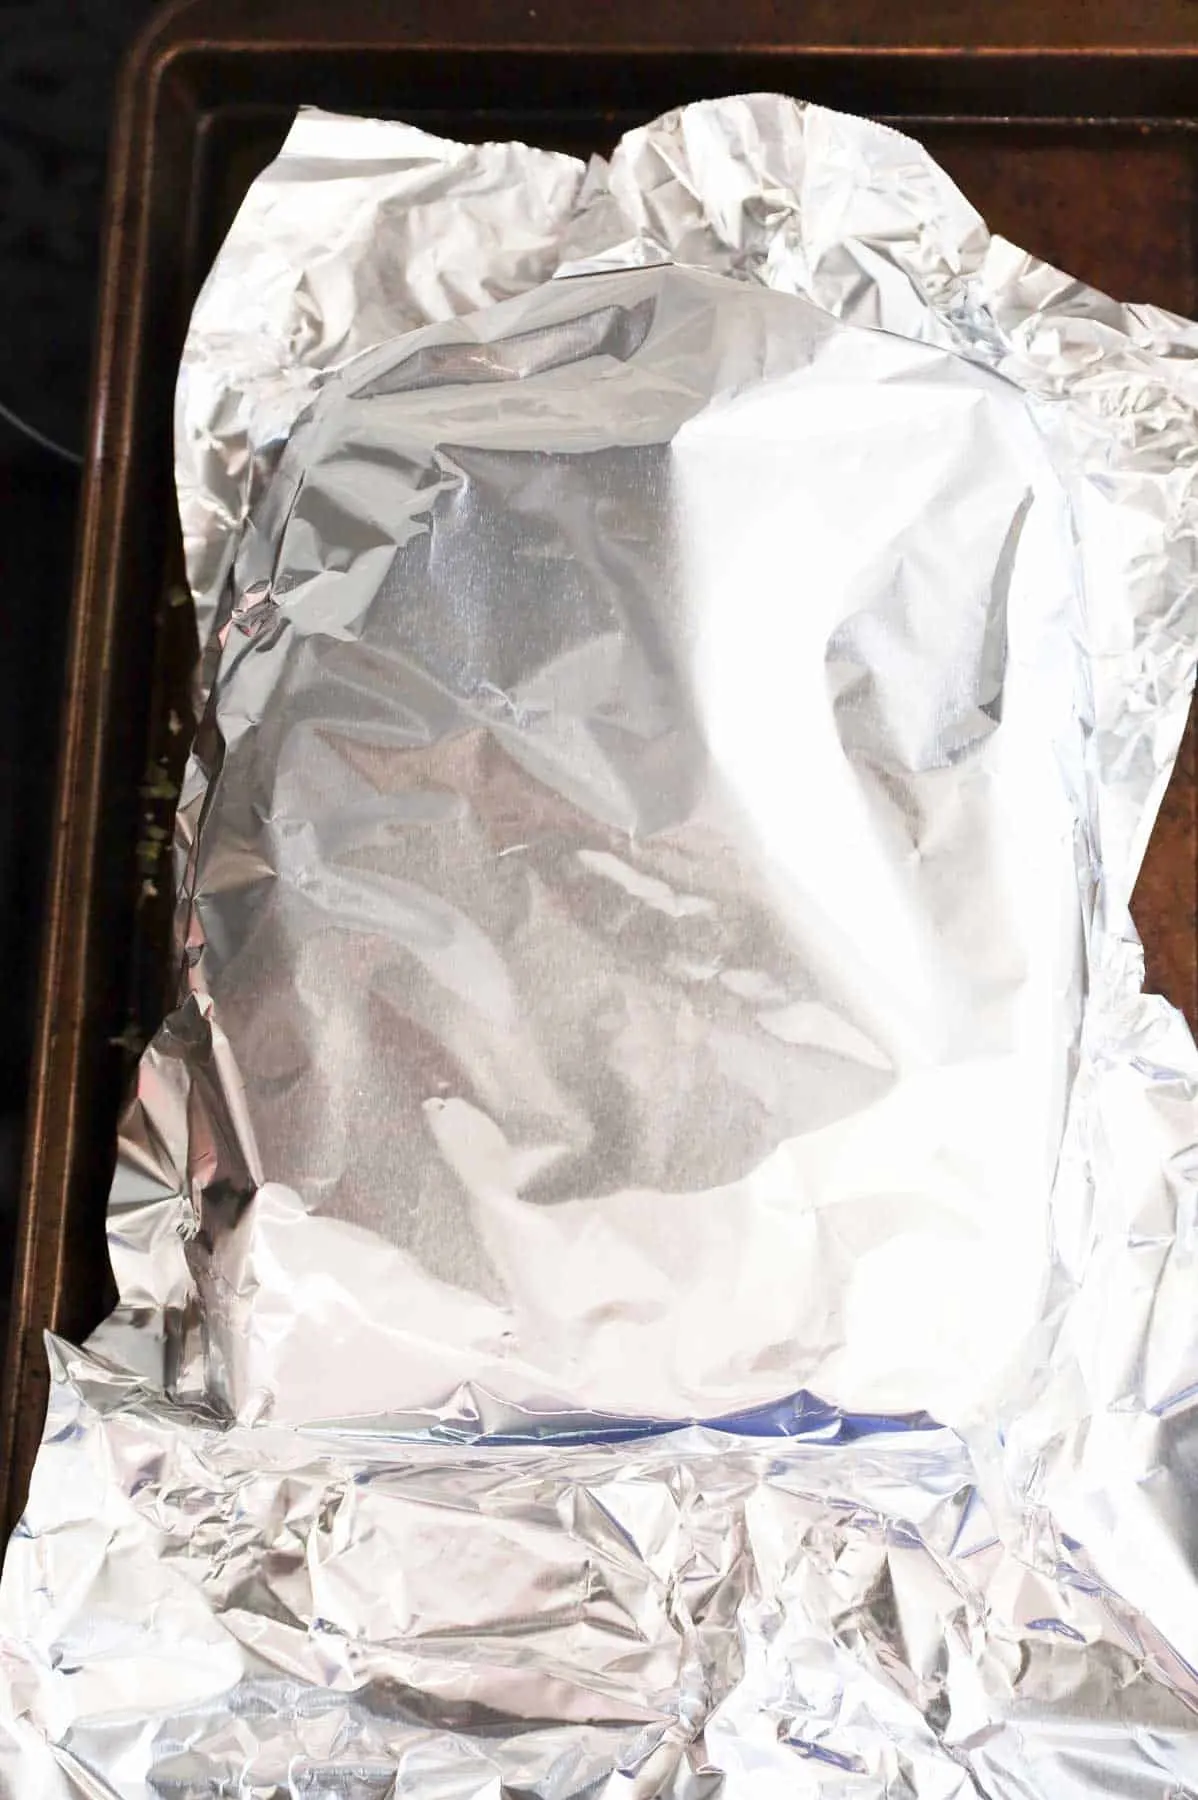 aluminum foil covering turkey bacon sliders on a baking sheet